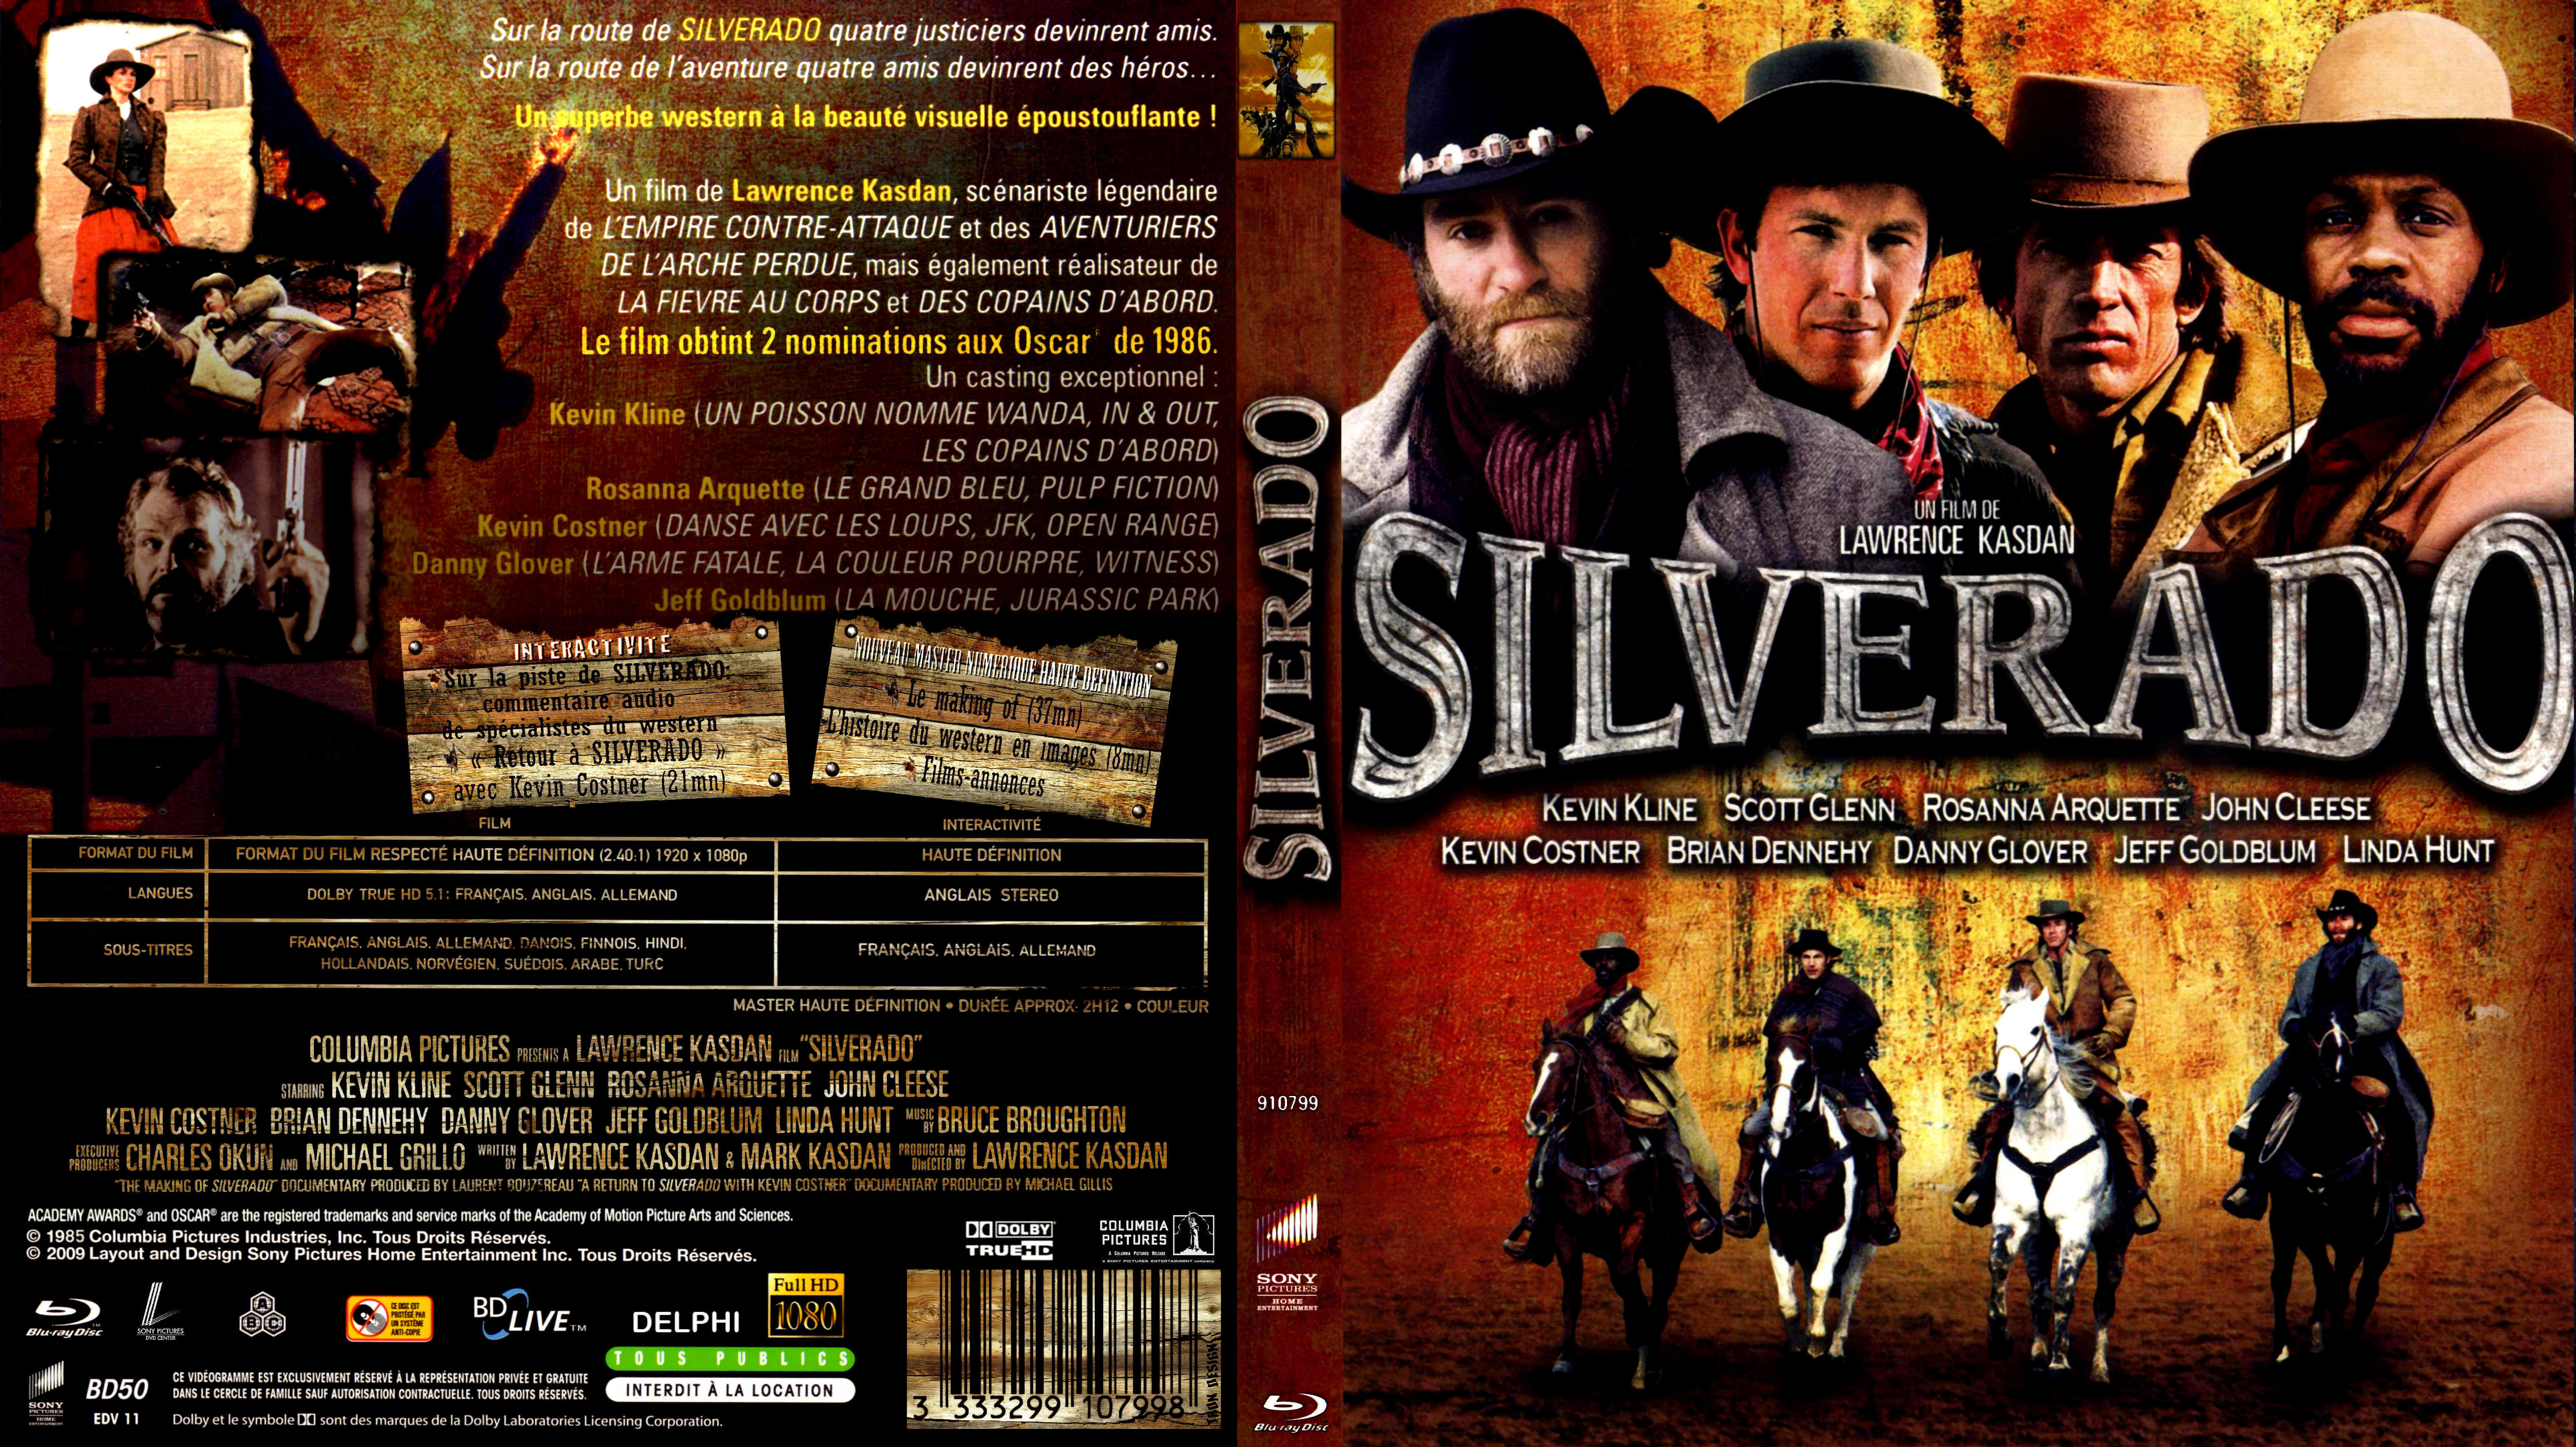 Jaquette DVD Silverado custom (BLU-RAY)